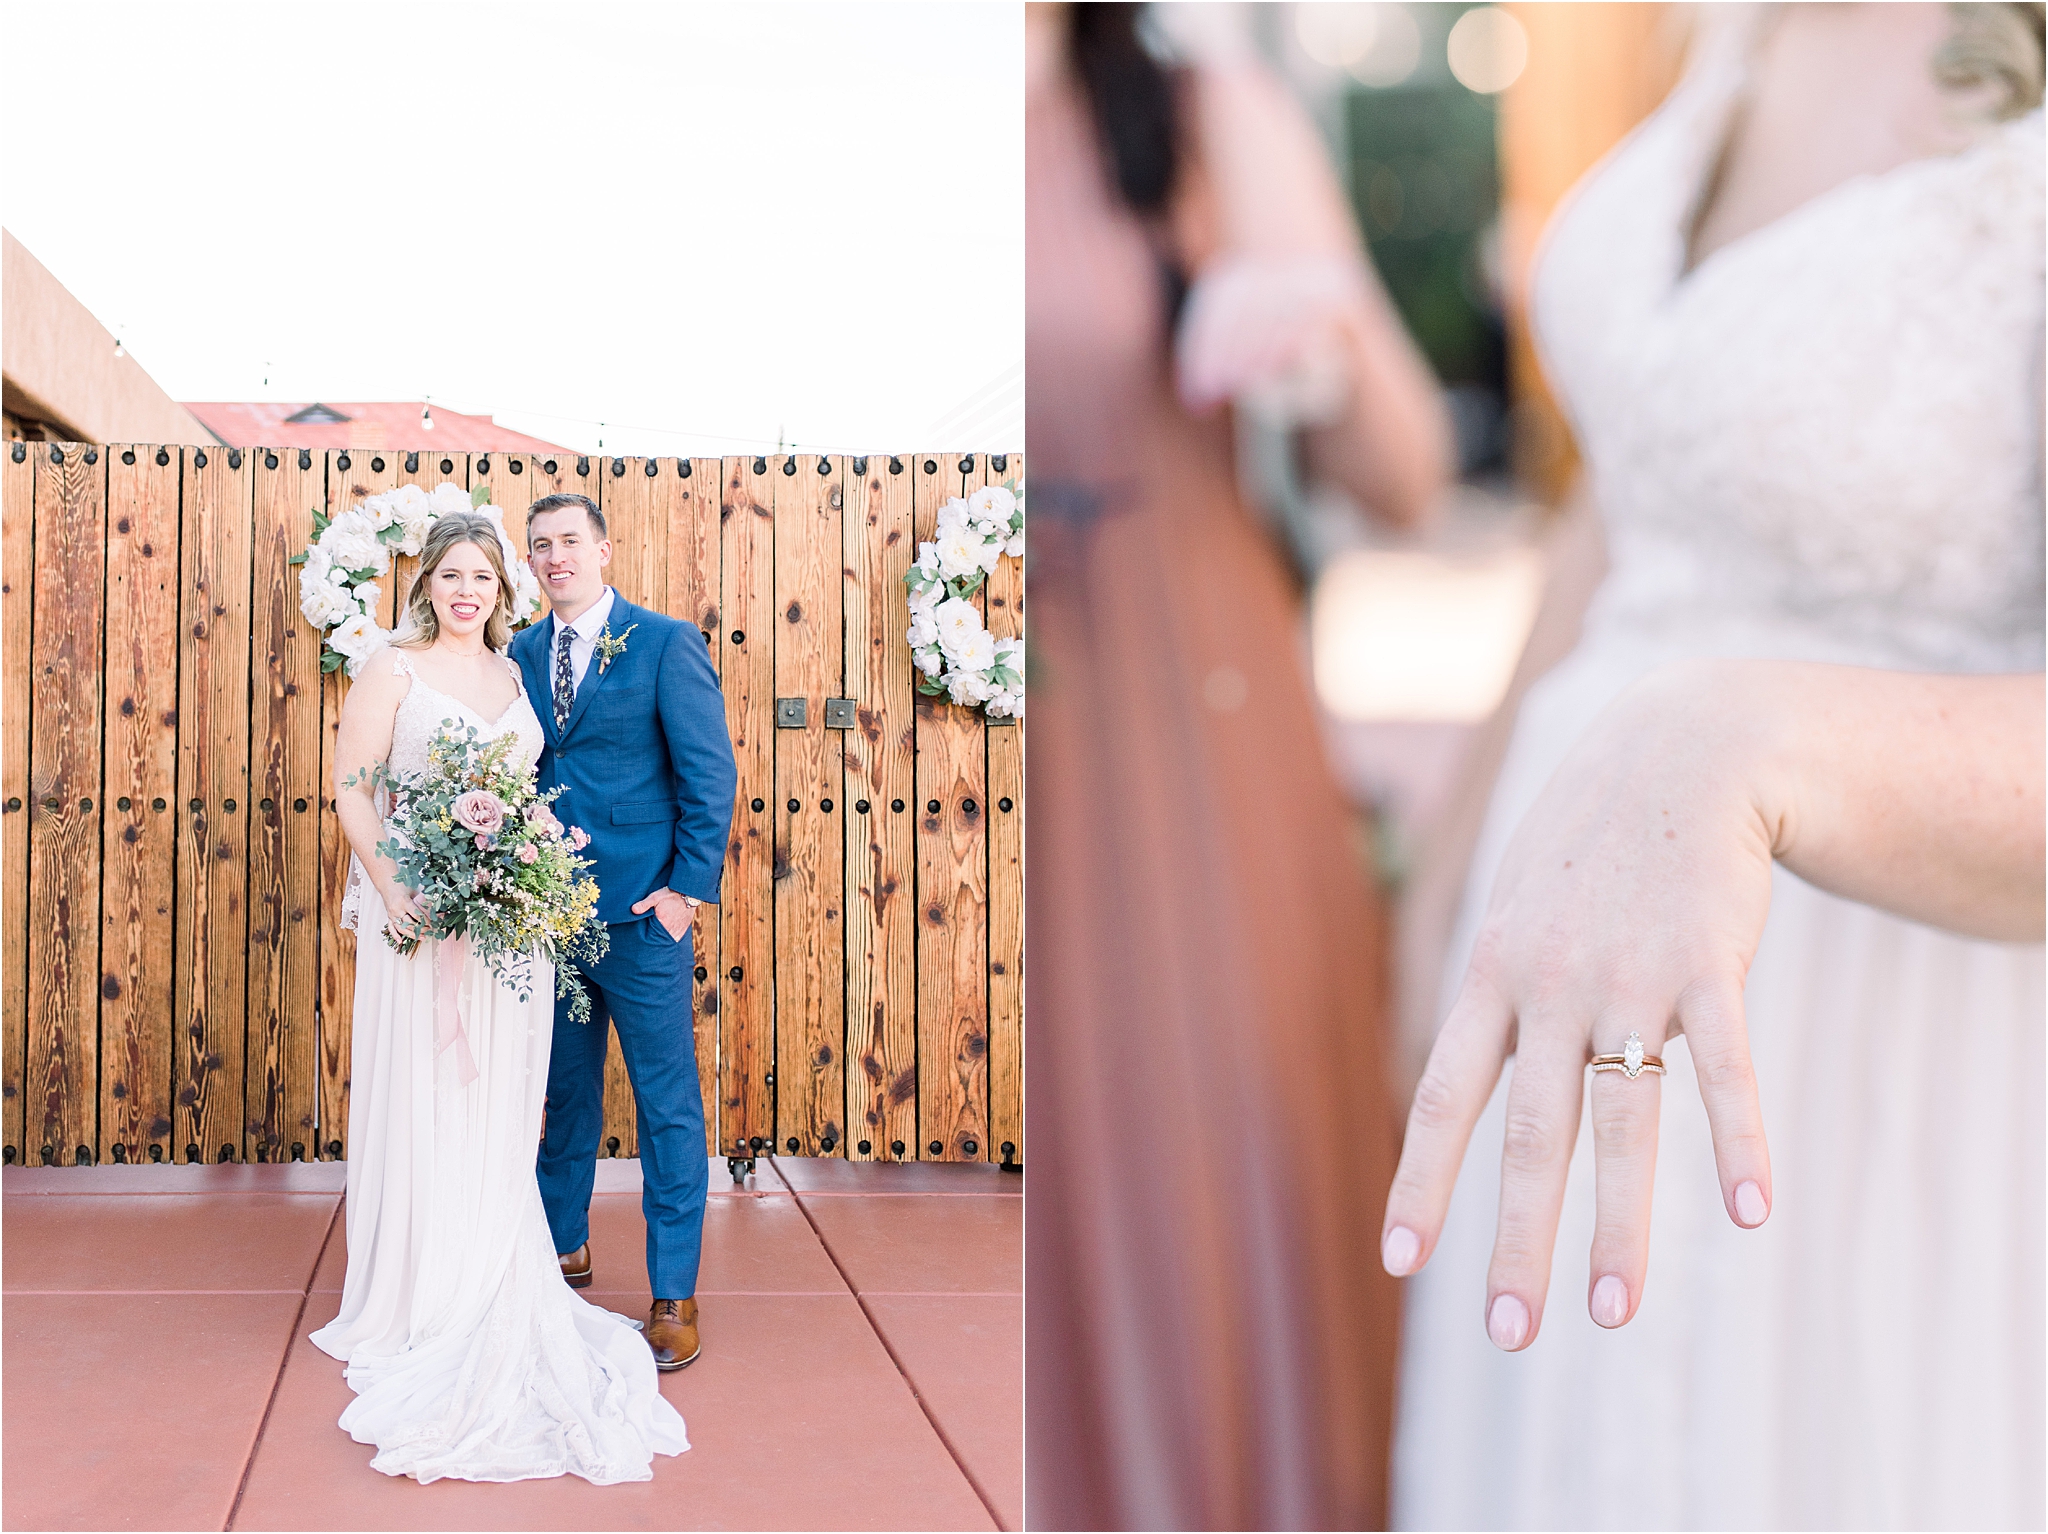 Stillwell House Wedding Tucson AZ Jessica and Dan bride and groom photos | Tucson Wedding Photographer | West End Photography